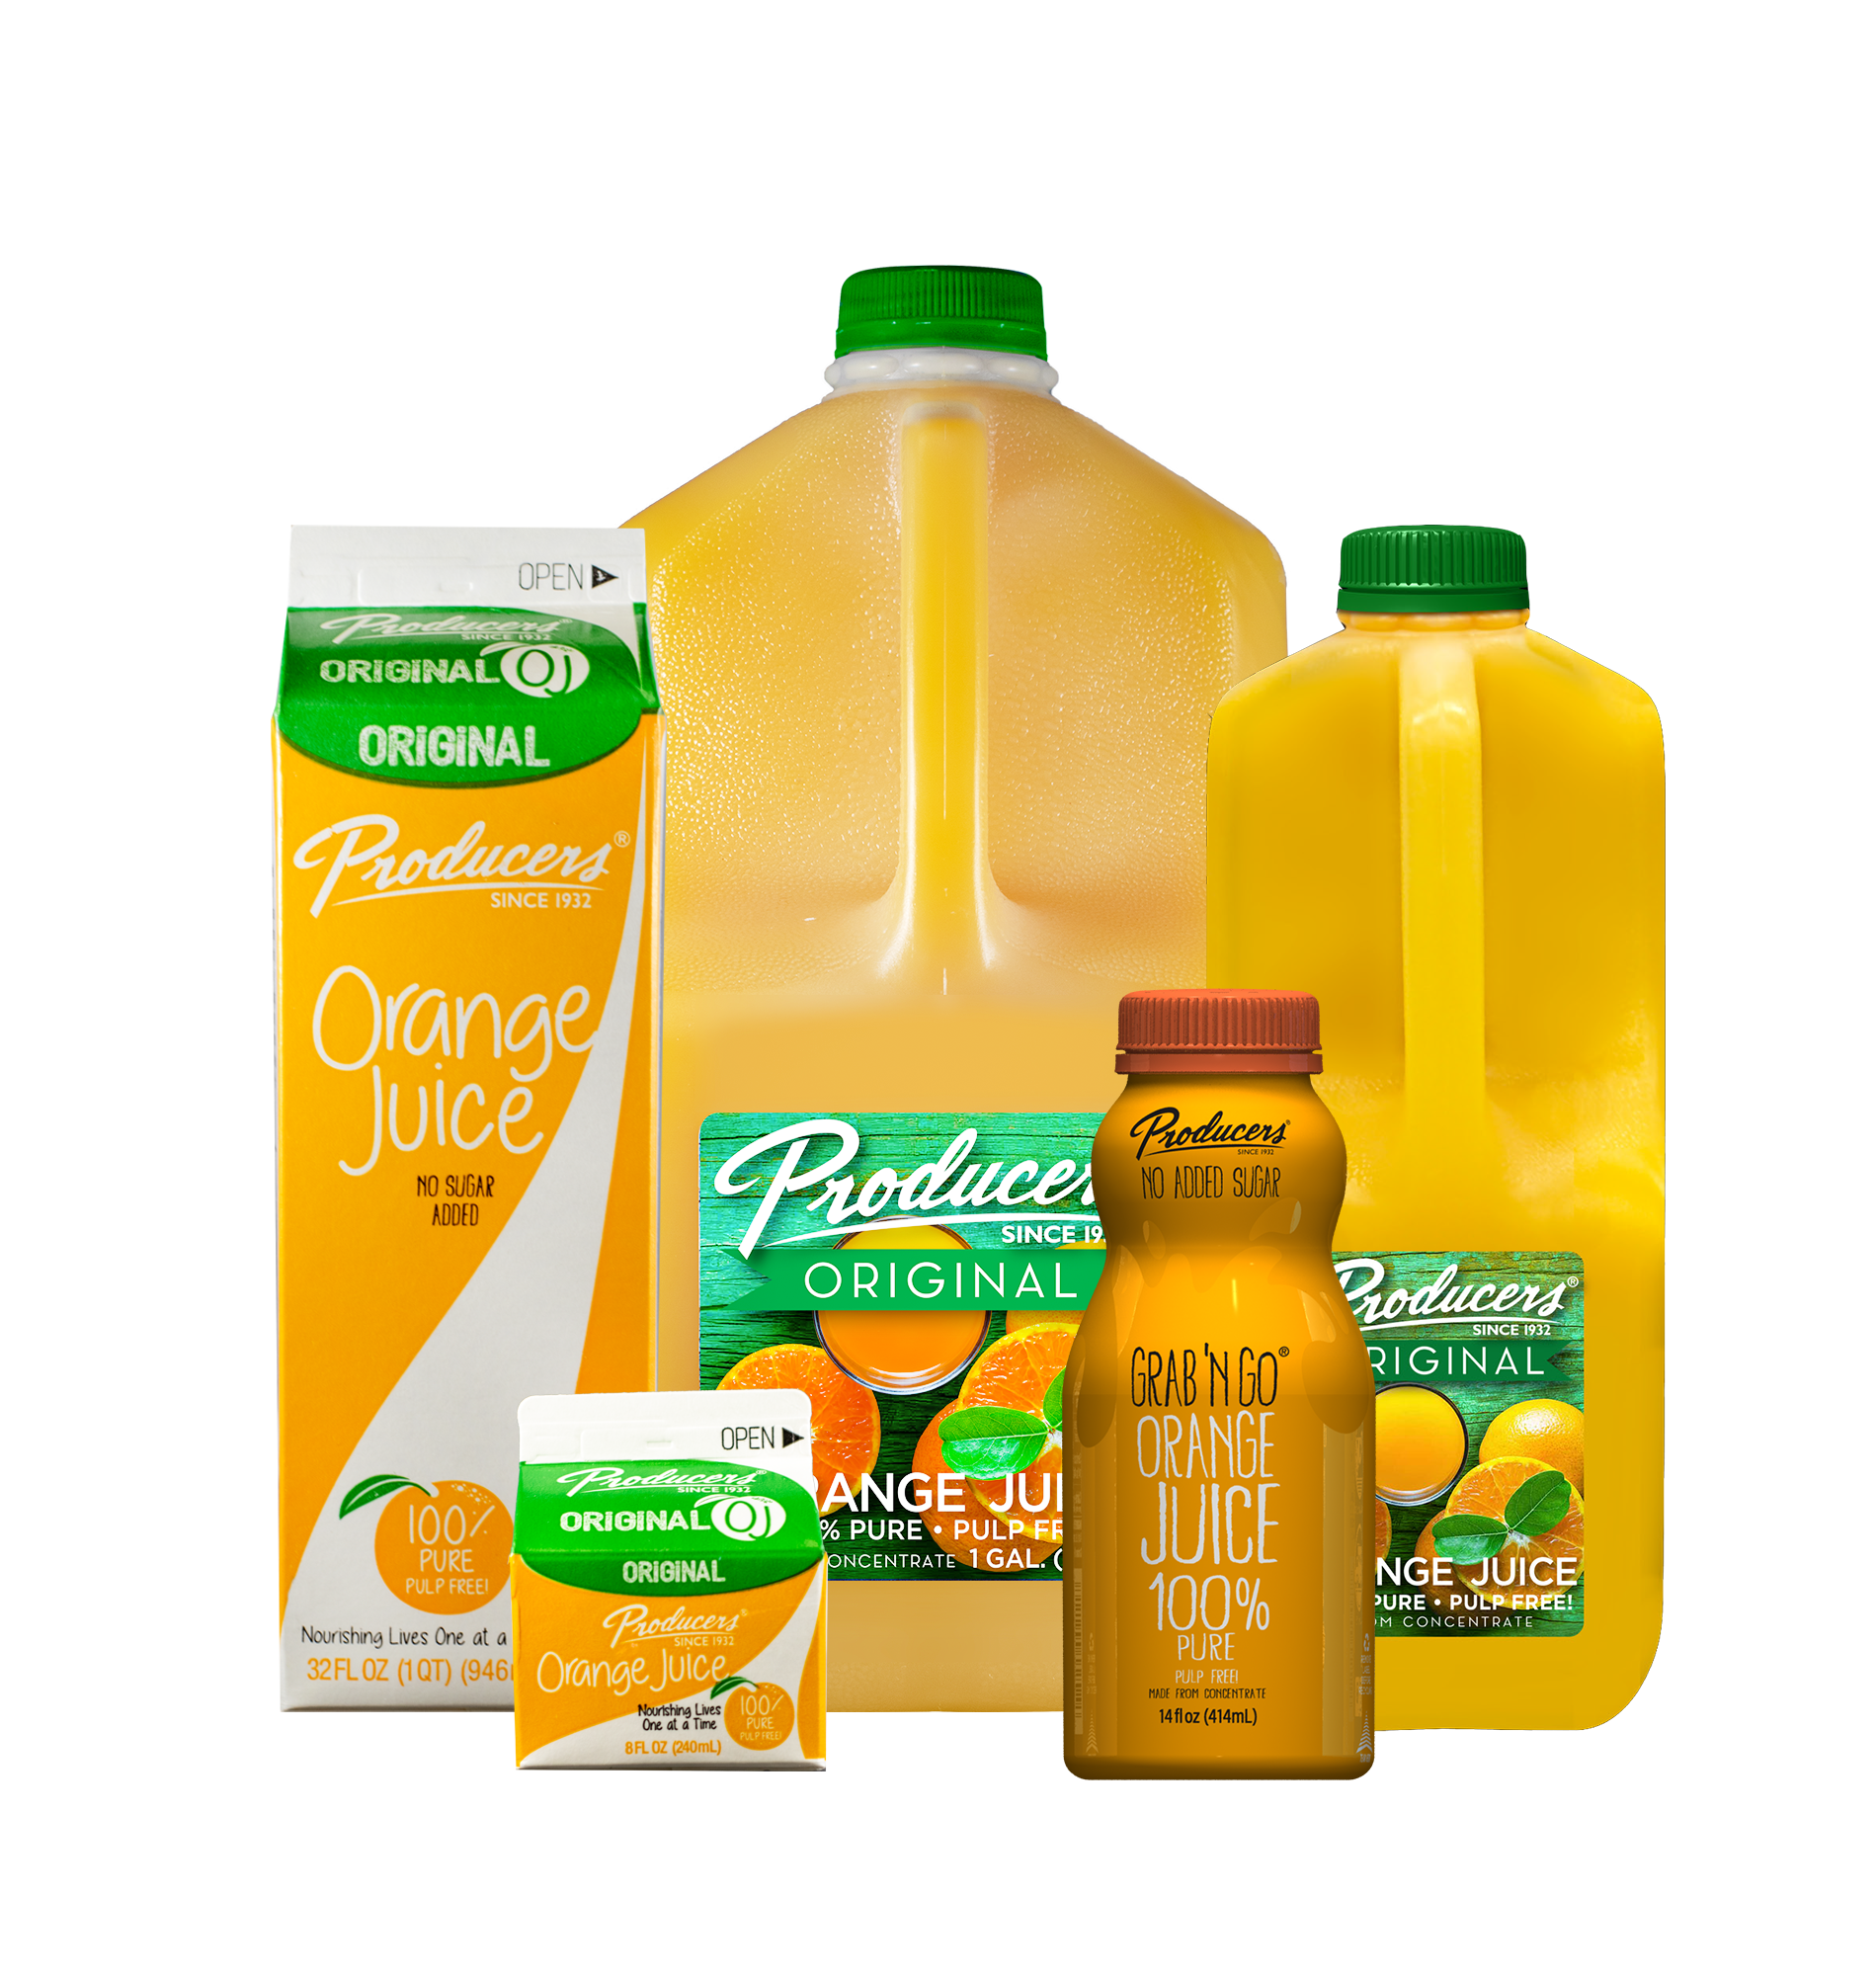 Producers Orange Juice Family: Gallon, Half Gallon, Quart, Grab N Go, 8 fluid ounces.